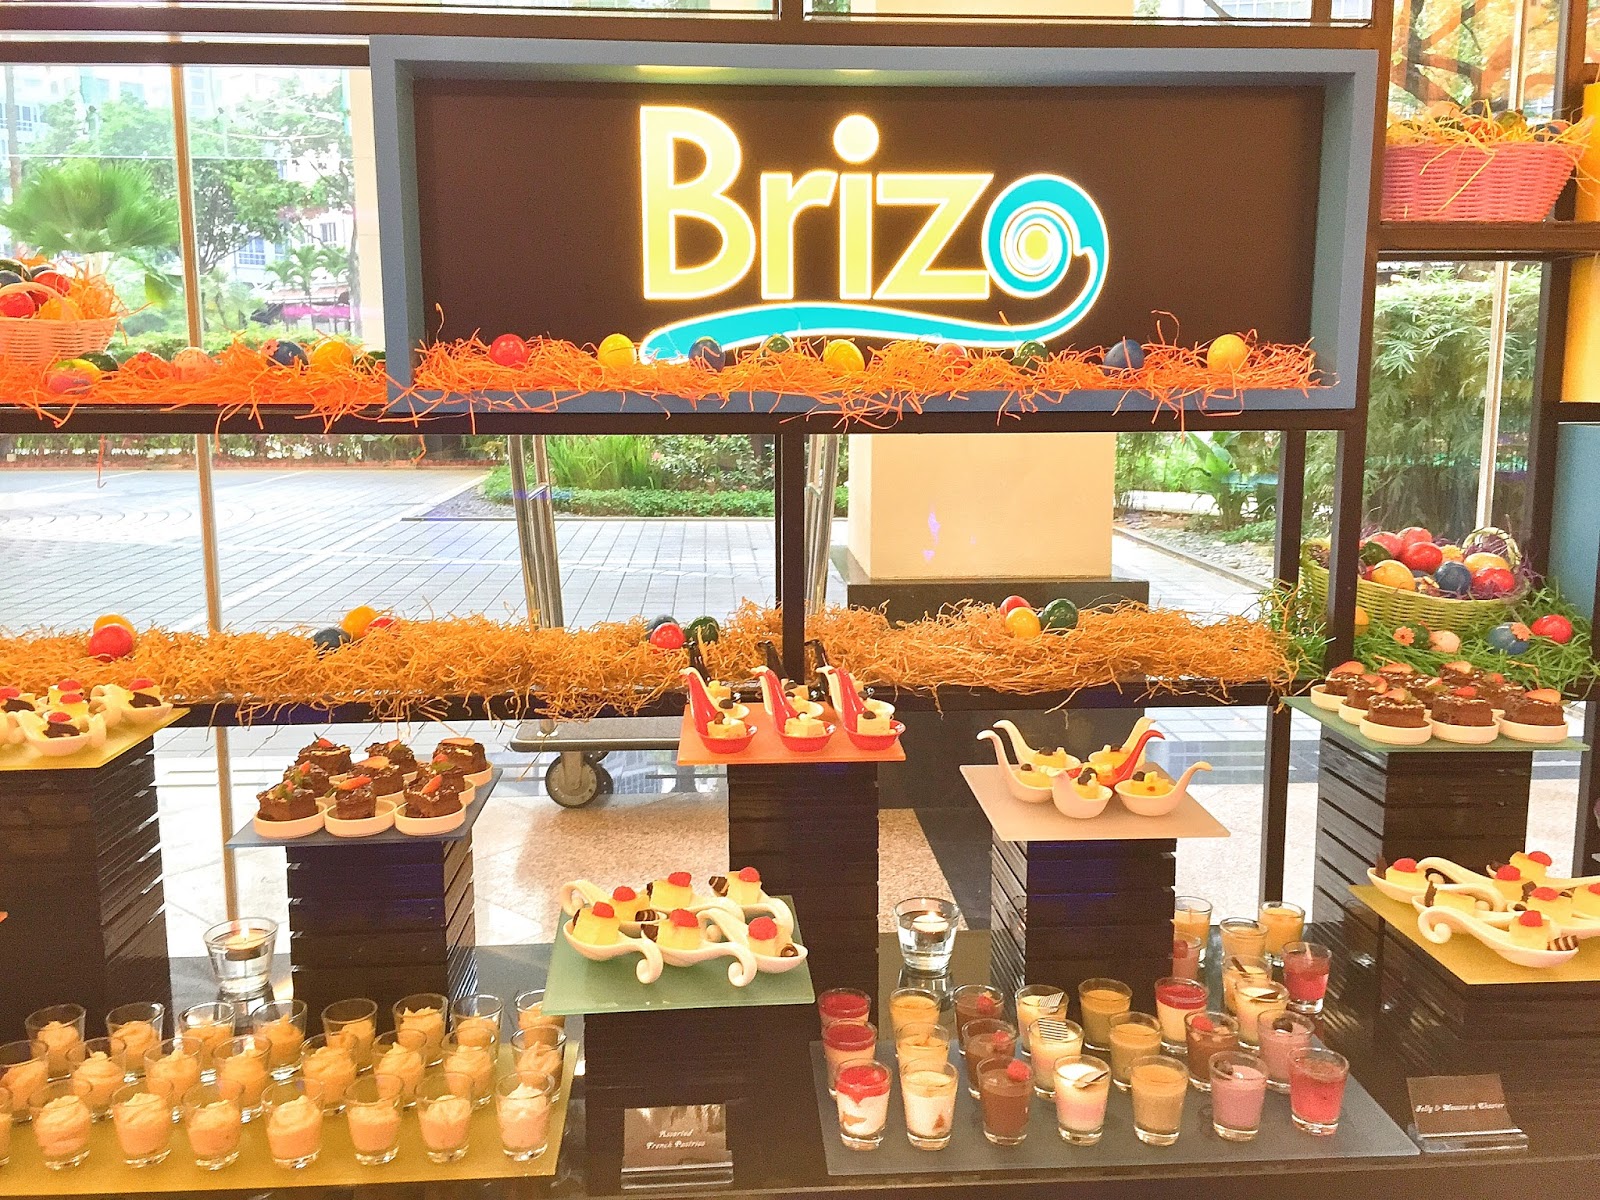 Brizo Restaurant and Bar - Desserts